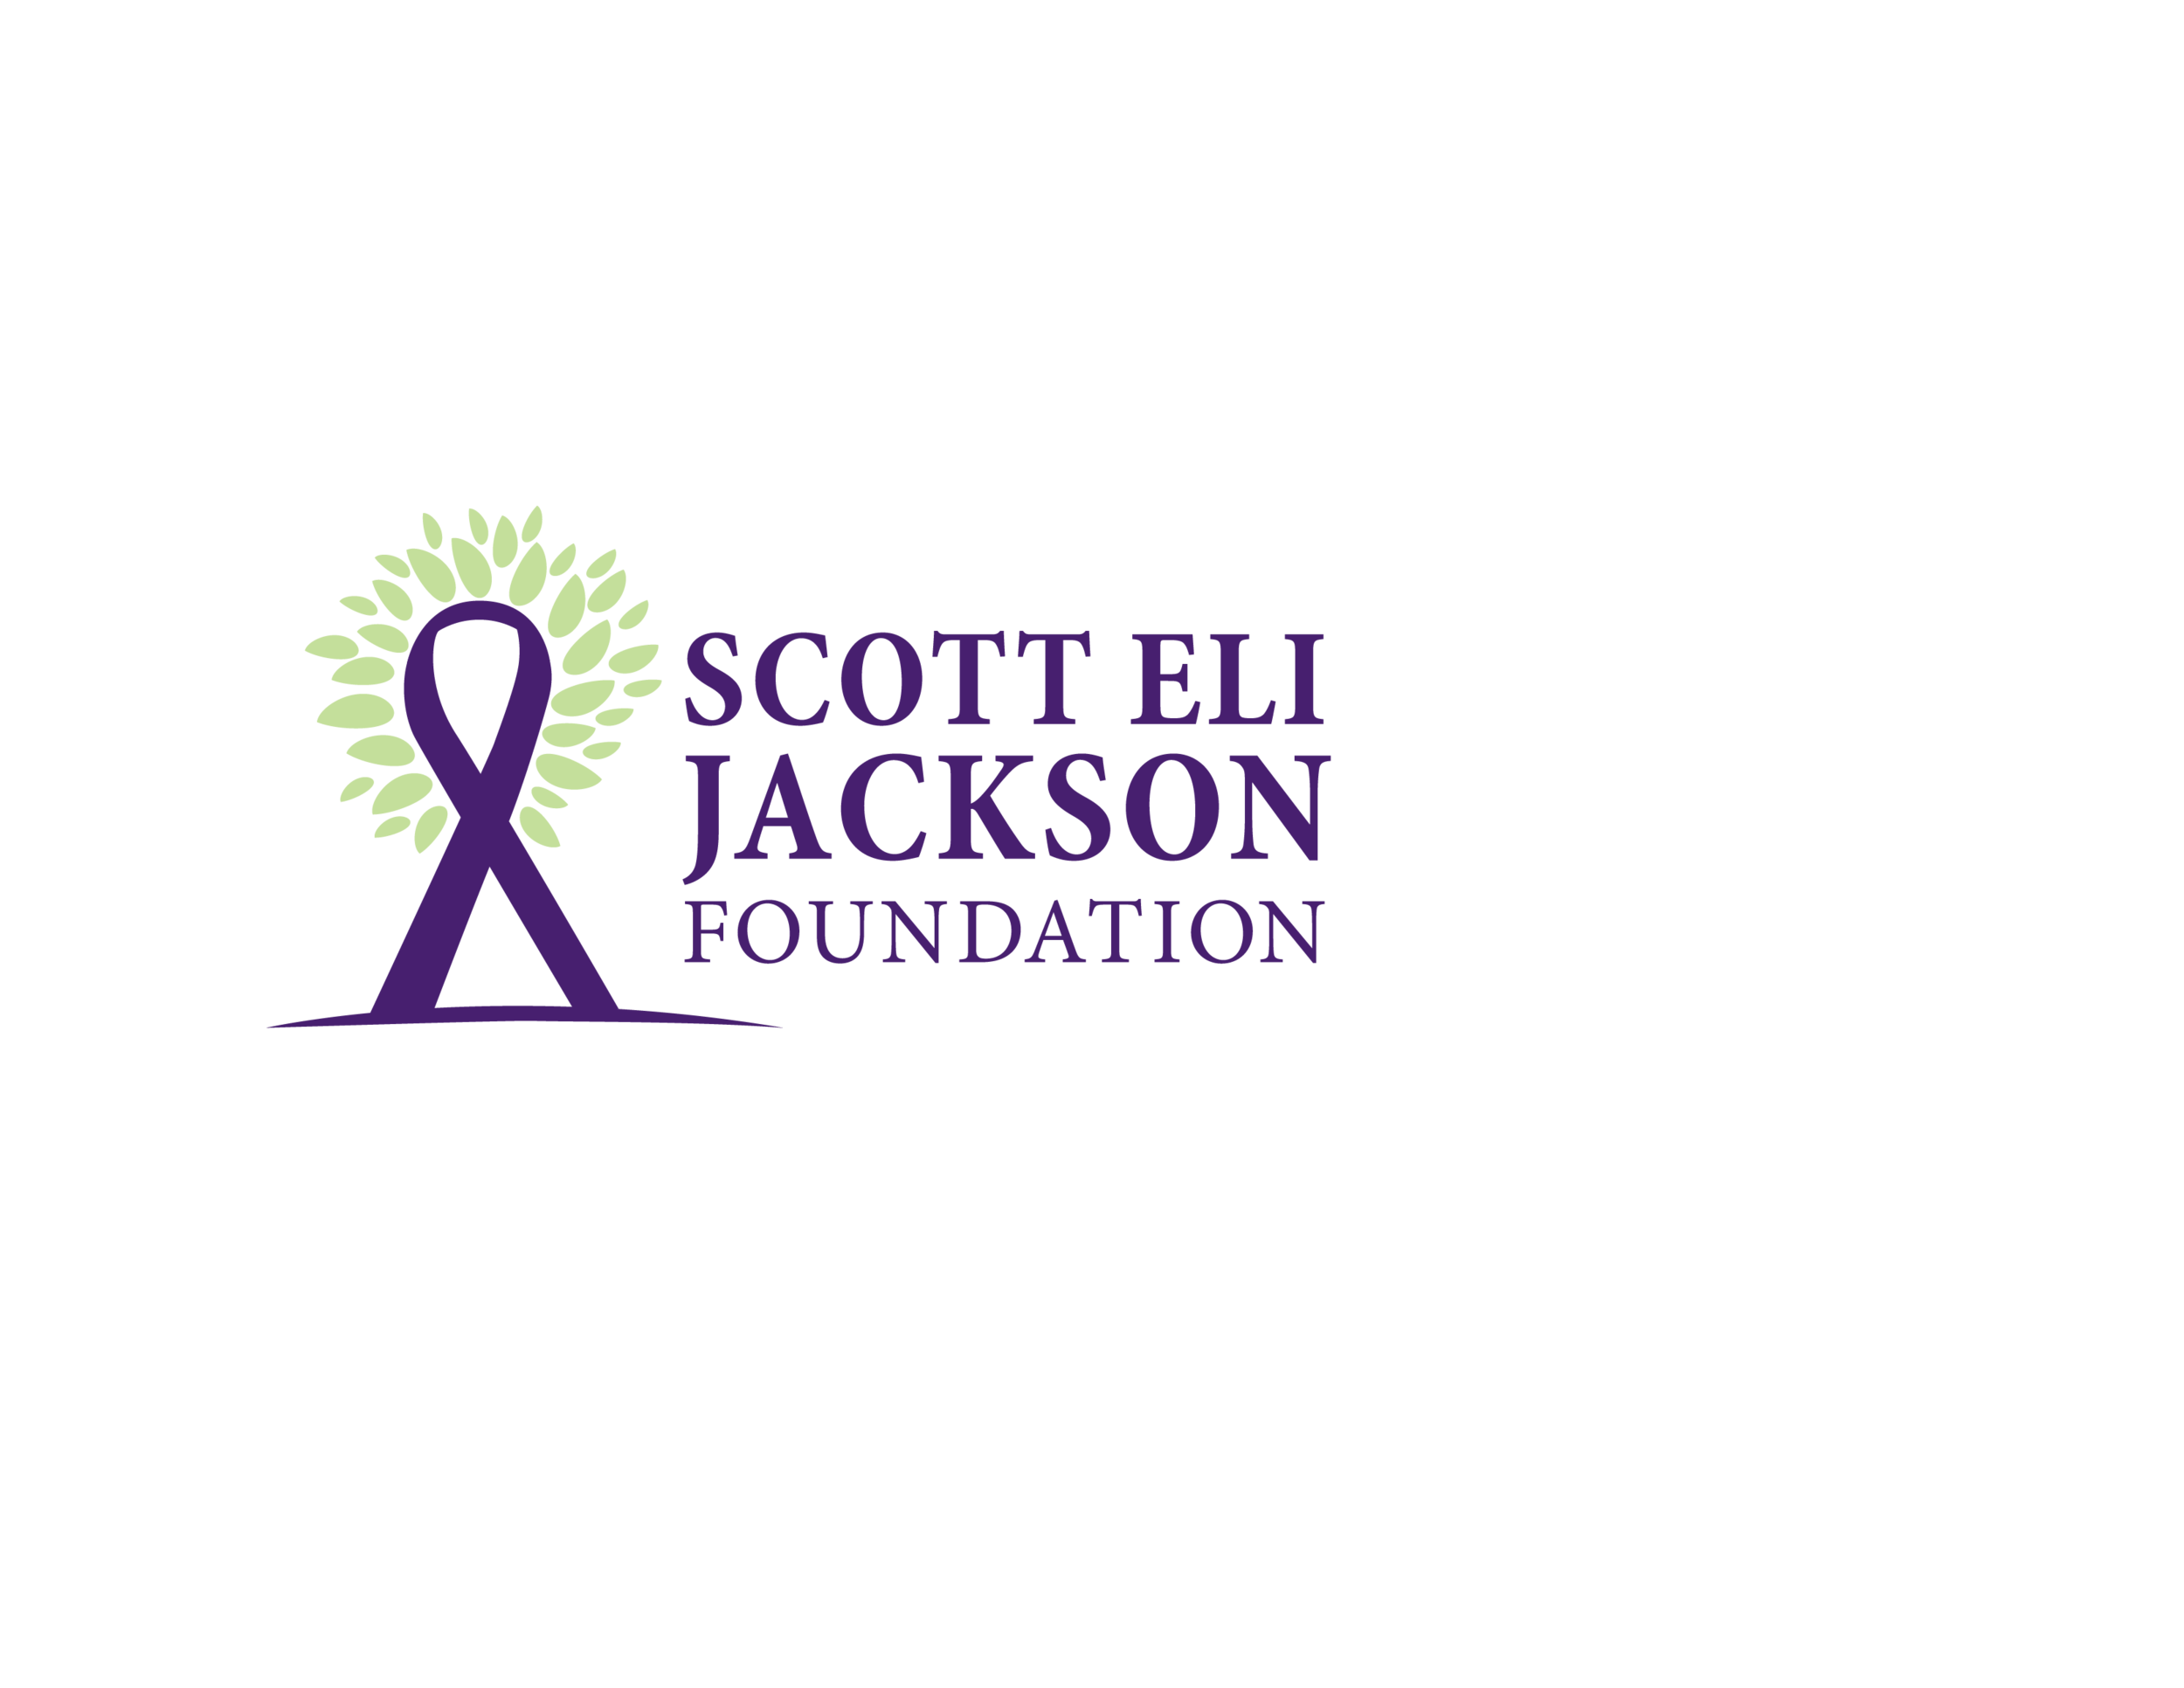 Scott Eli Jackson Foundation.png